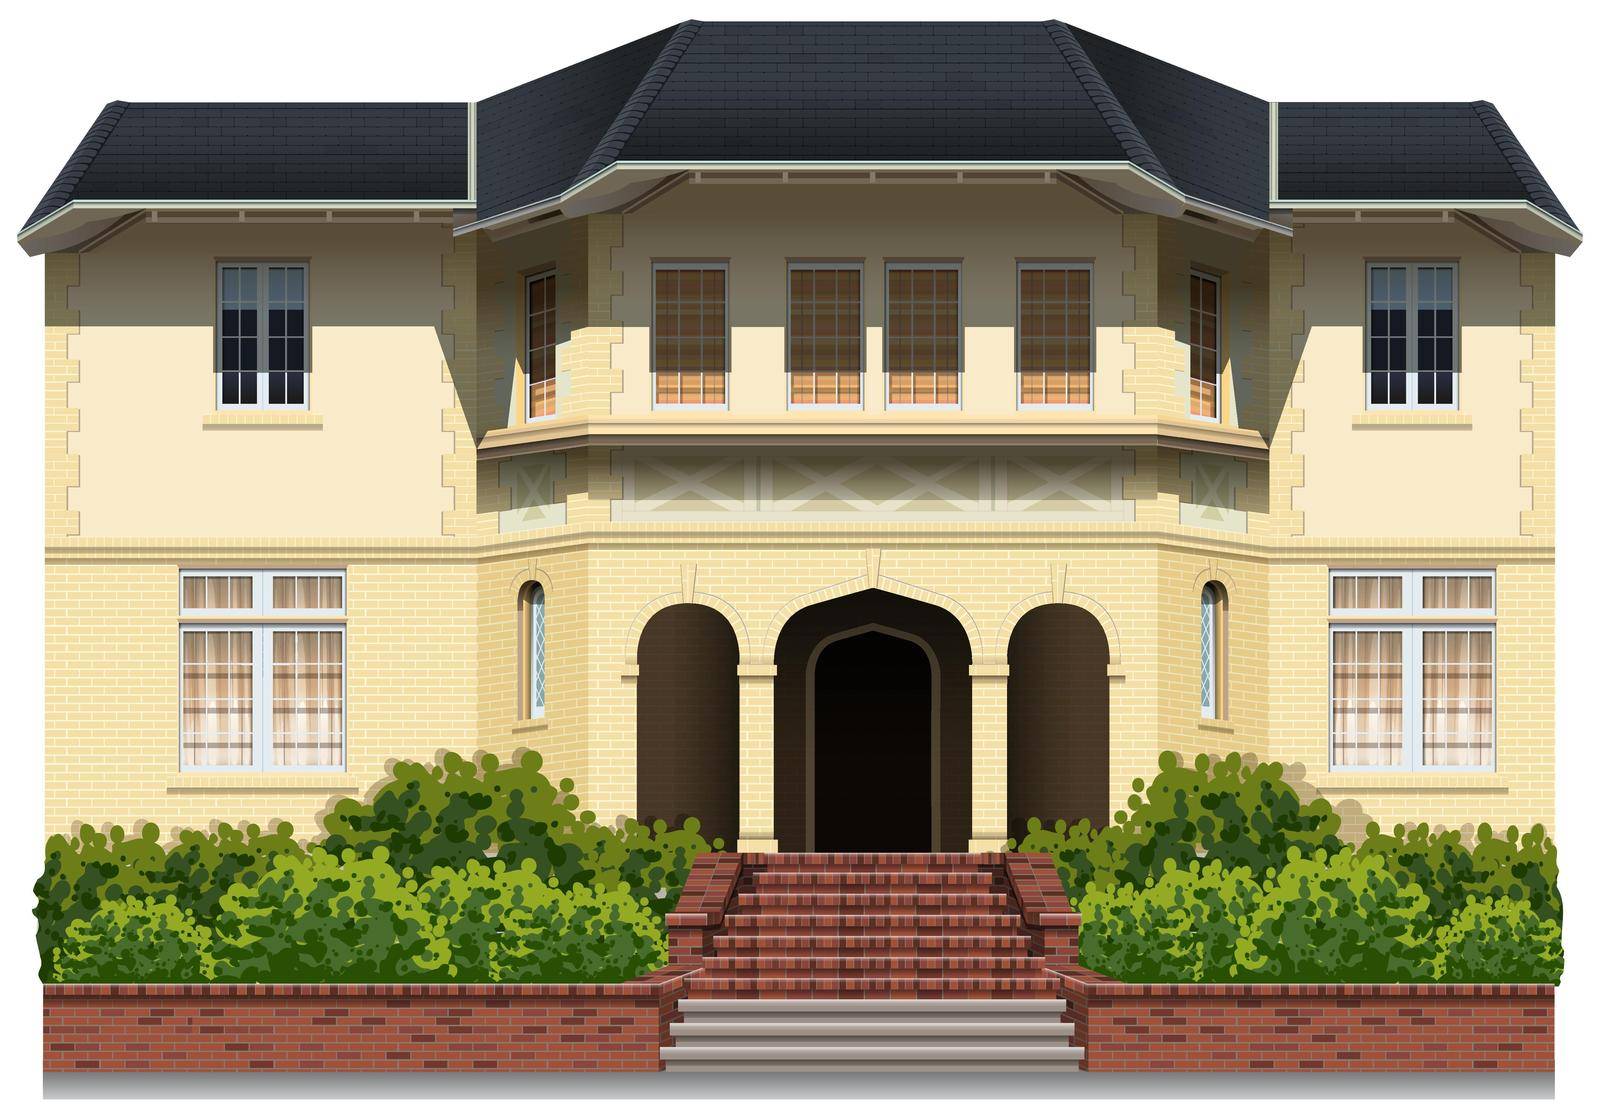 Illustration of an elegance house